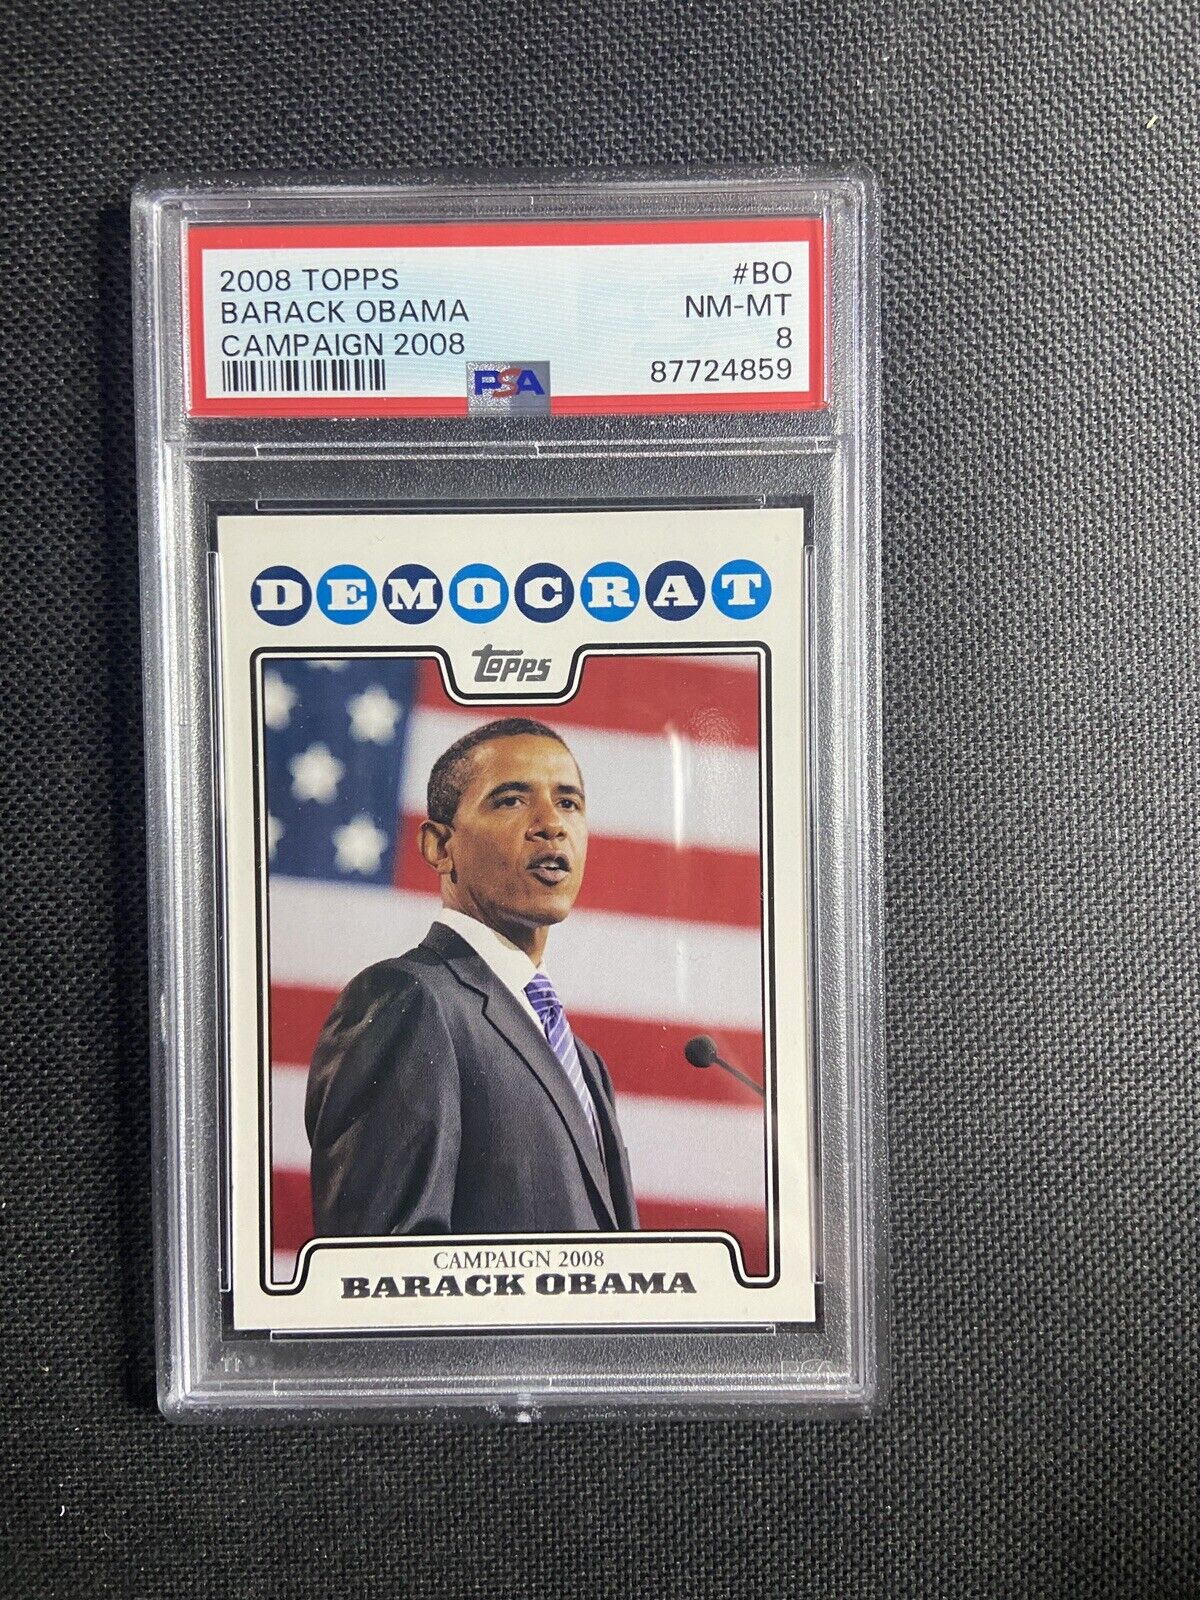 2008 Topps Campaign President Barack Obama RC Rookie PSA 8